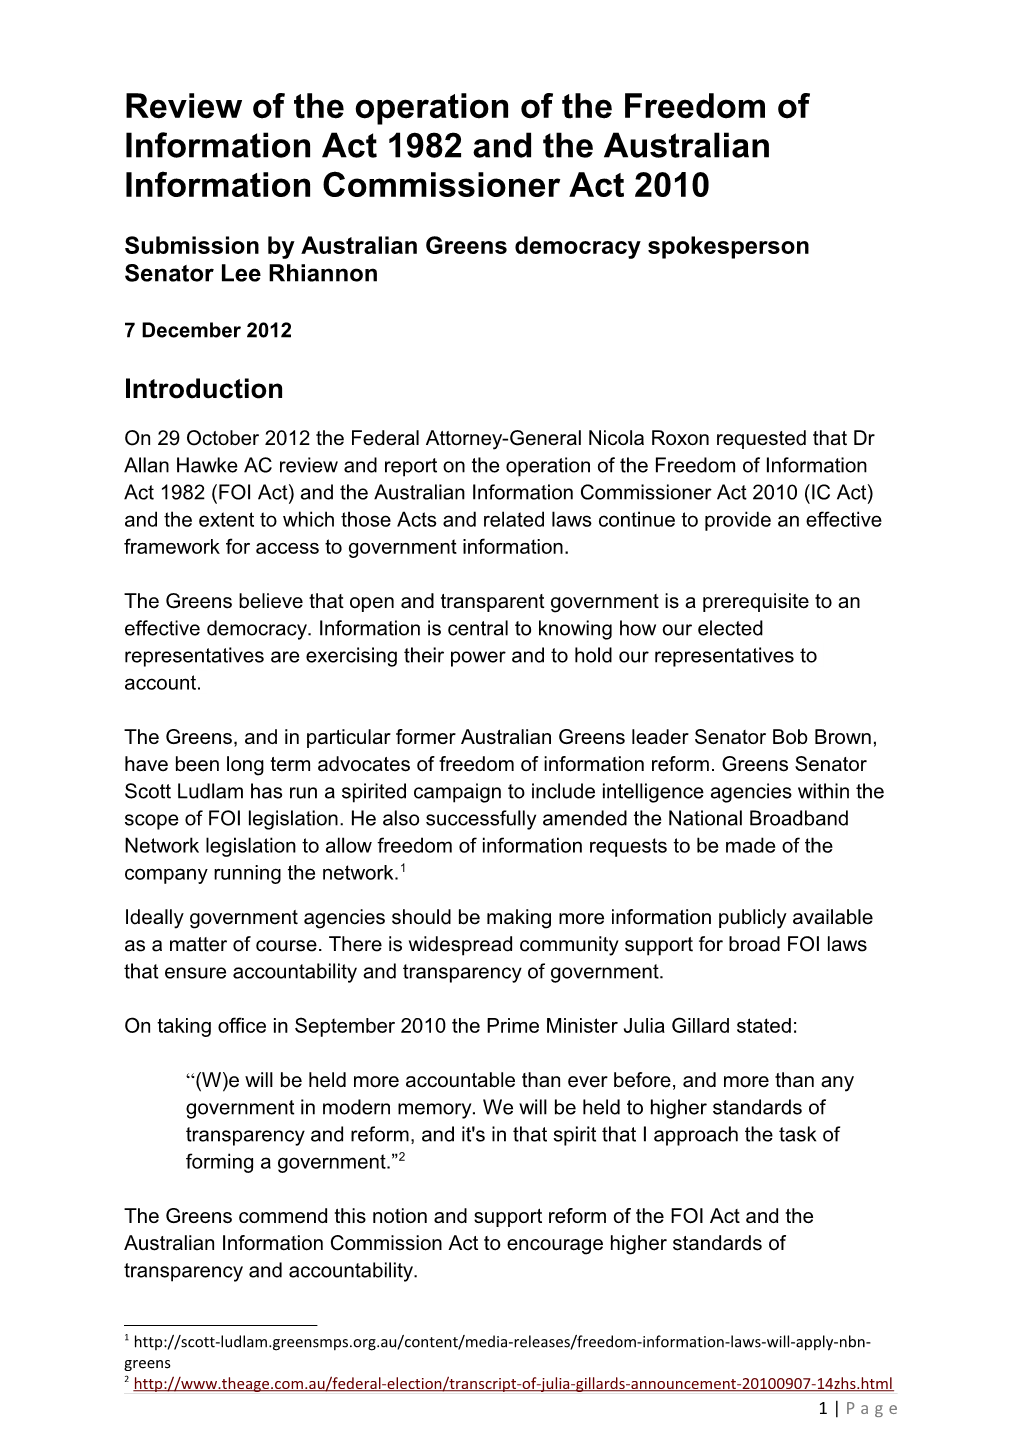 Submission by Australian Greens Democracy Spokesperson Senator Lee Rhiannon